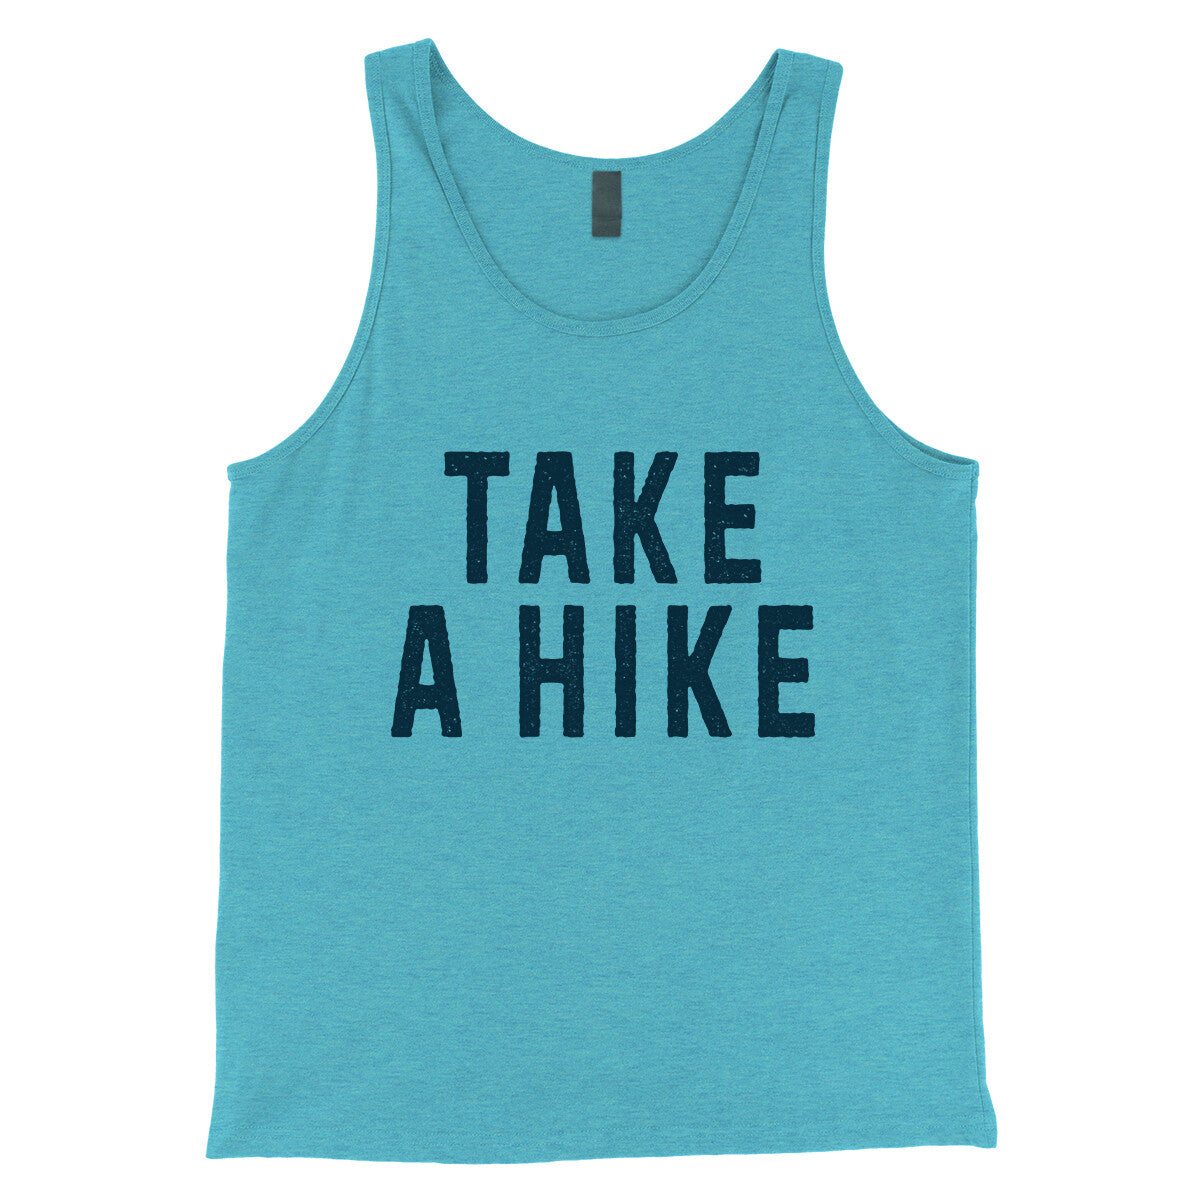 Take a Hike in Aqua Triblend Color